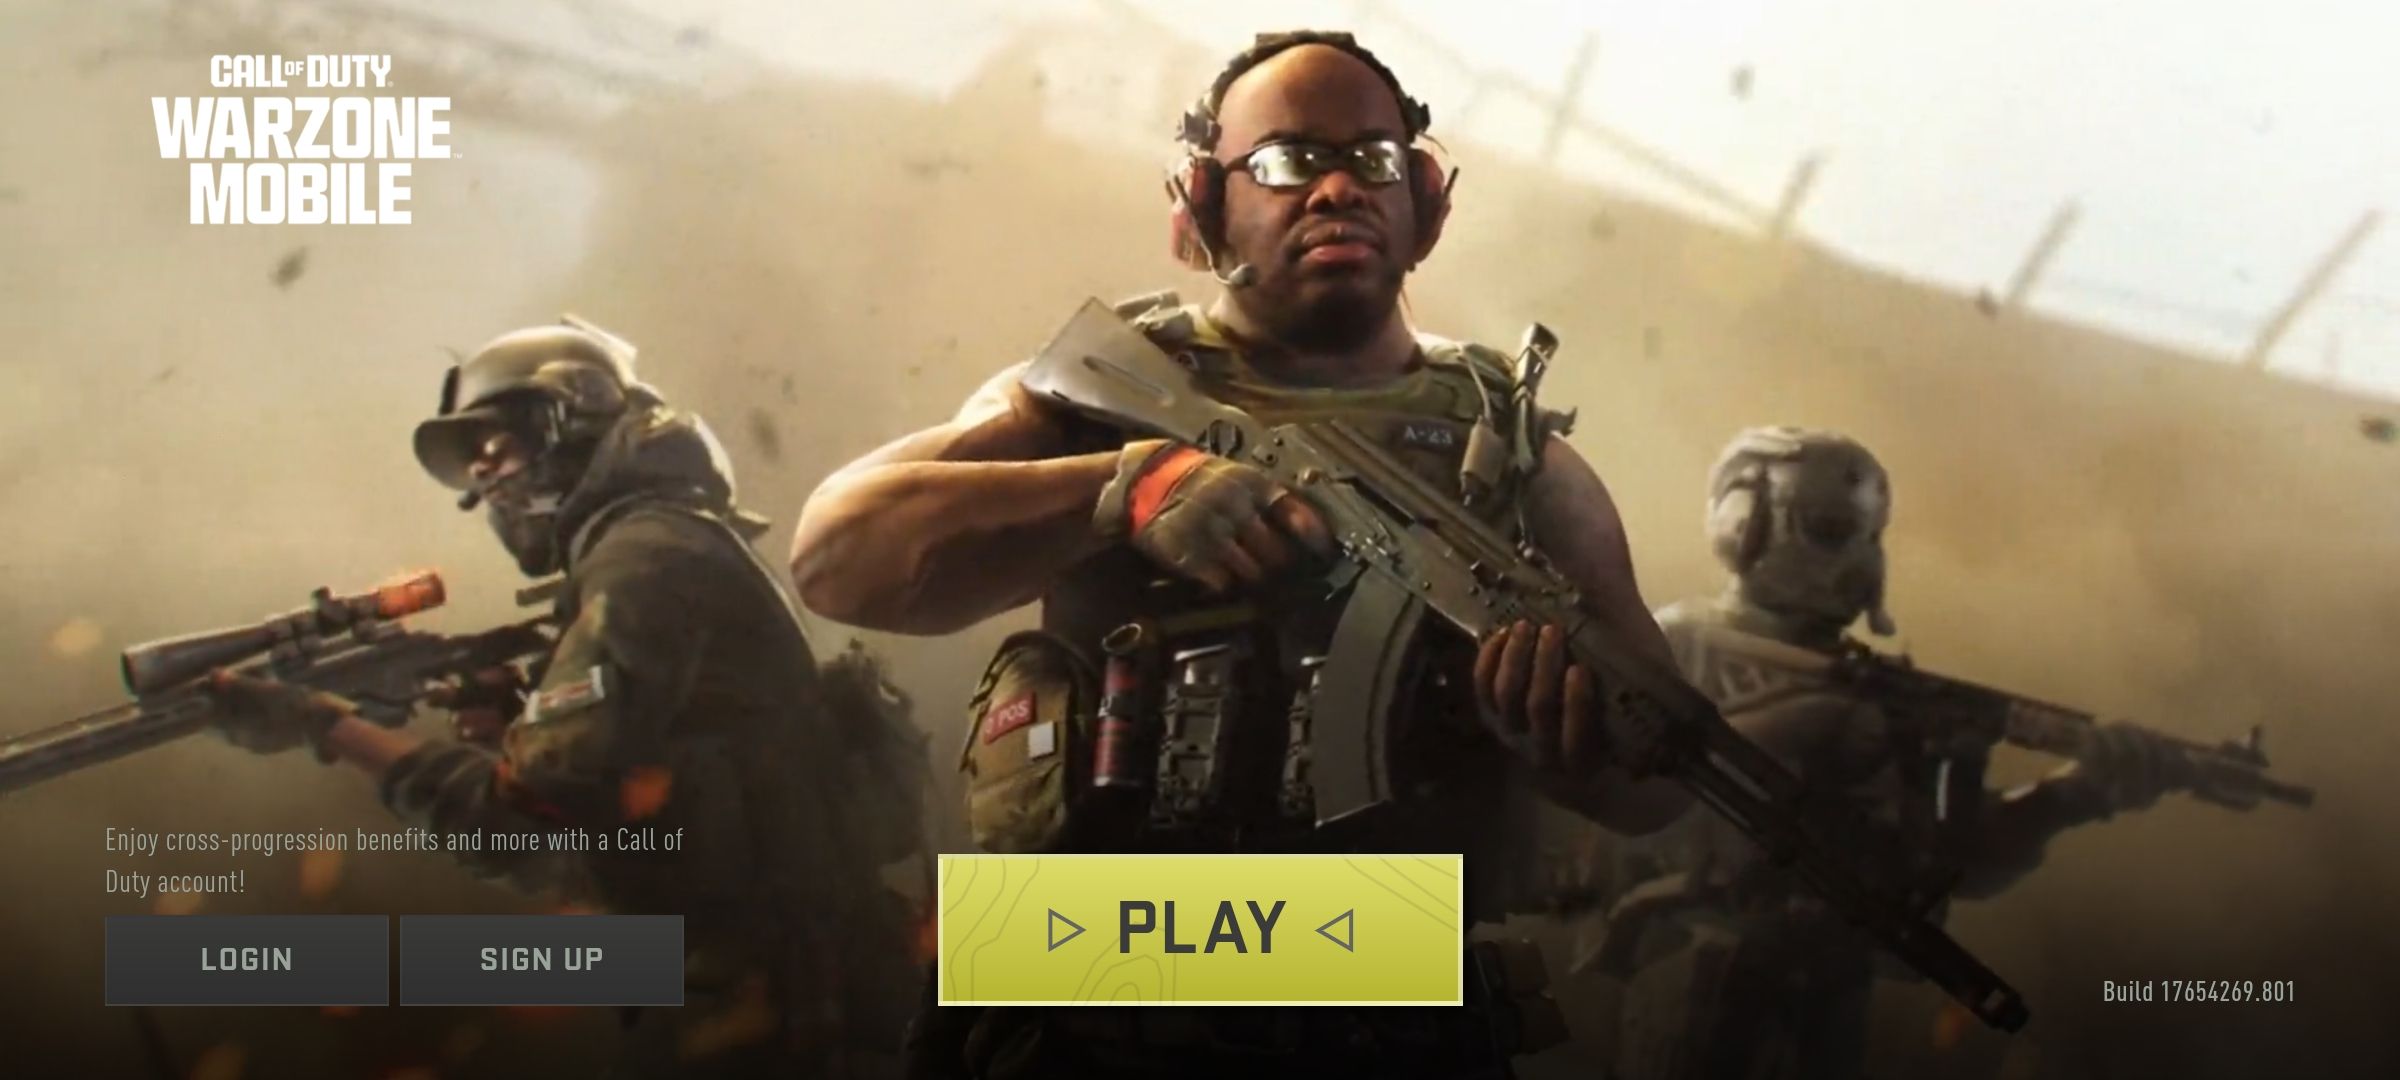 Call of Duty Warzone Mobile play screen screenshot